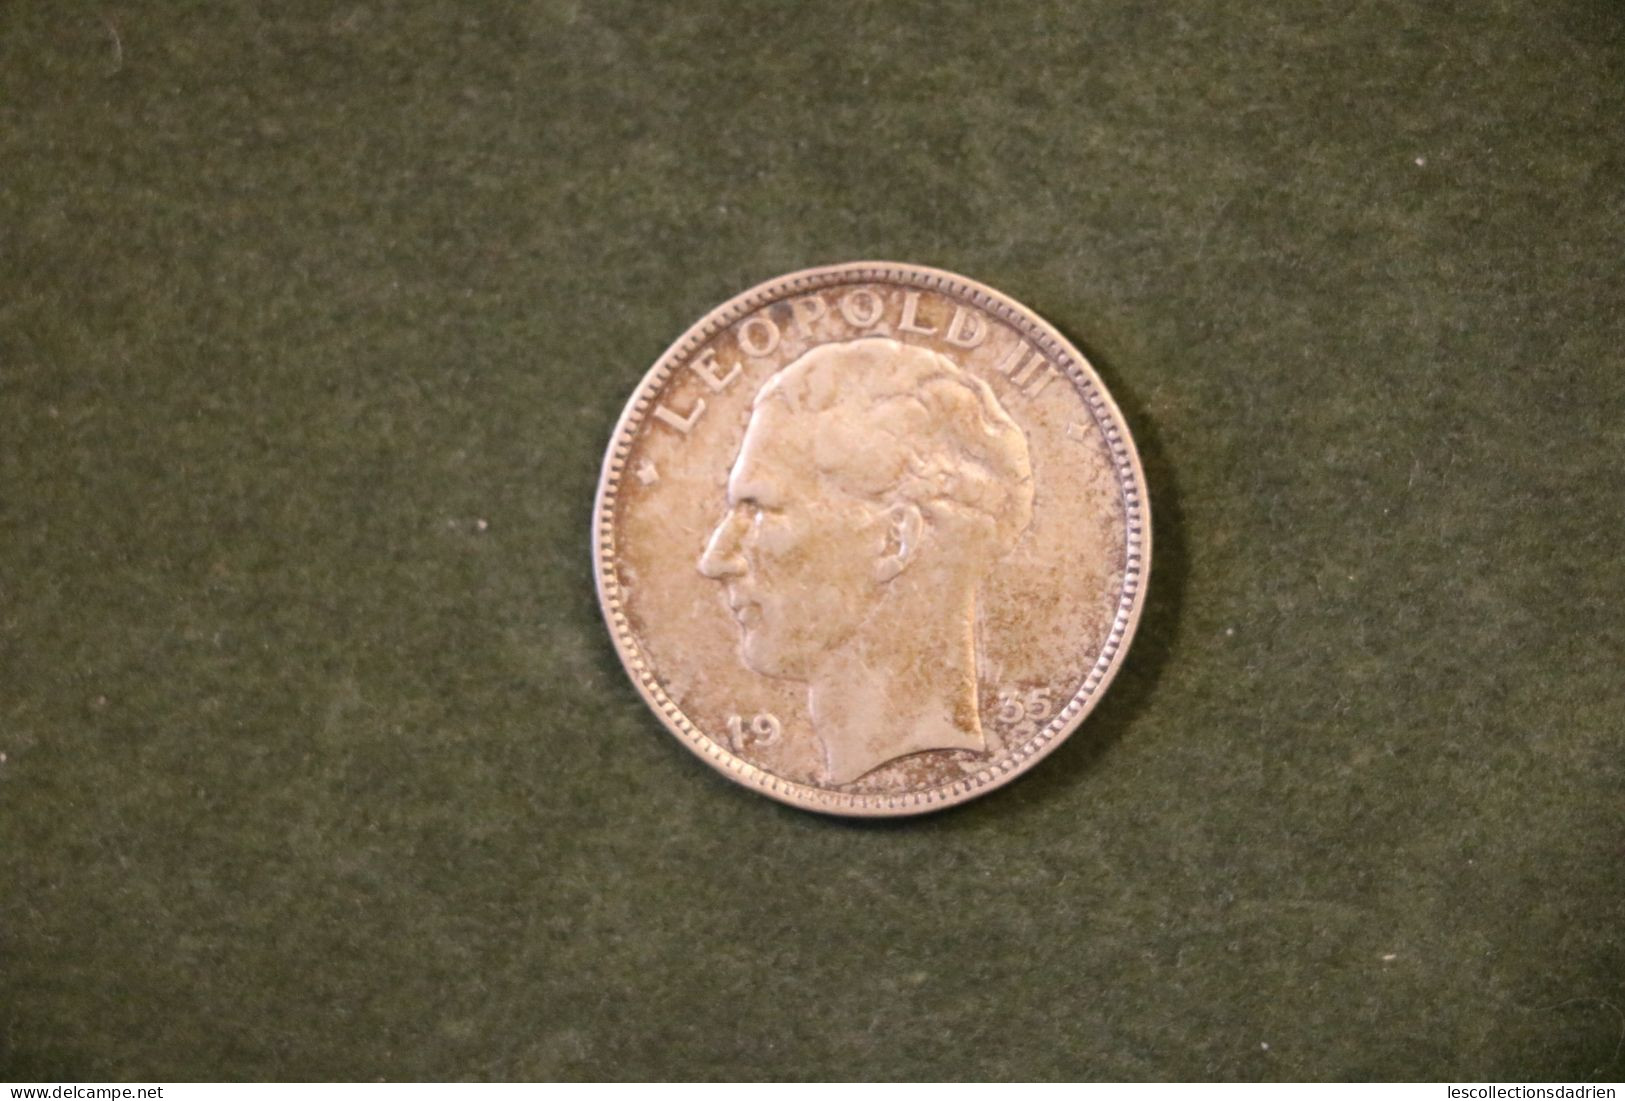 Pièce En Argent Belgique 20 Francs 1935  -  Belgian Silver Coin /2 - 20 Frank